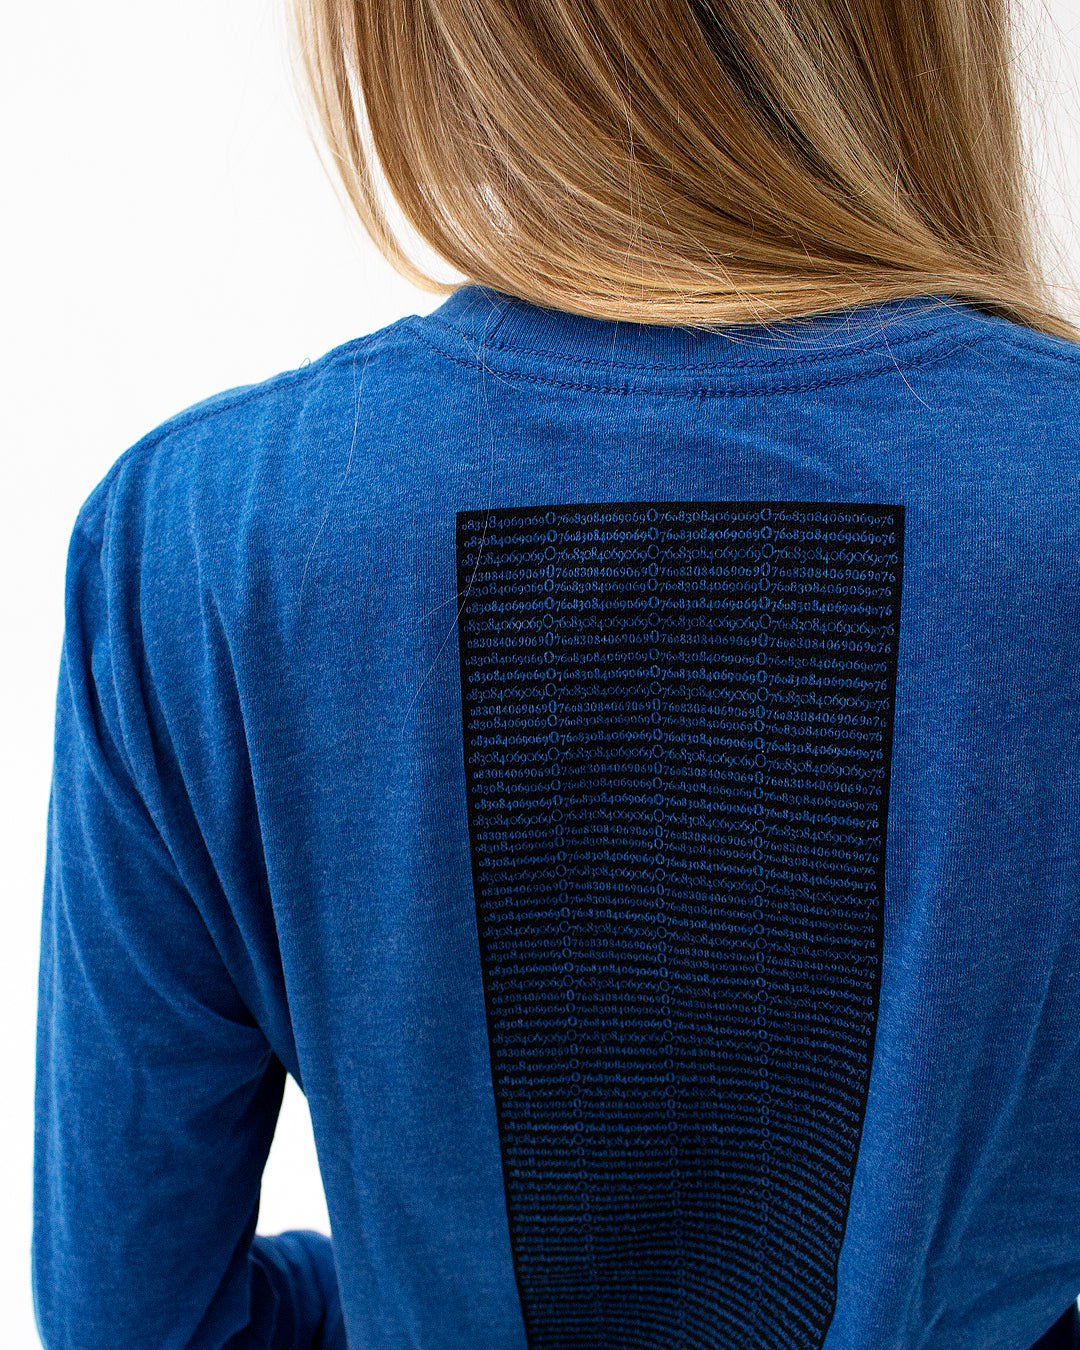 t. Weeyn Backbone Steel  ASCII code women's blue long sleeve t shirt with angel number close up